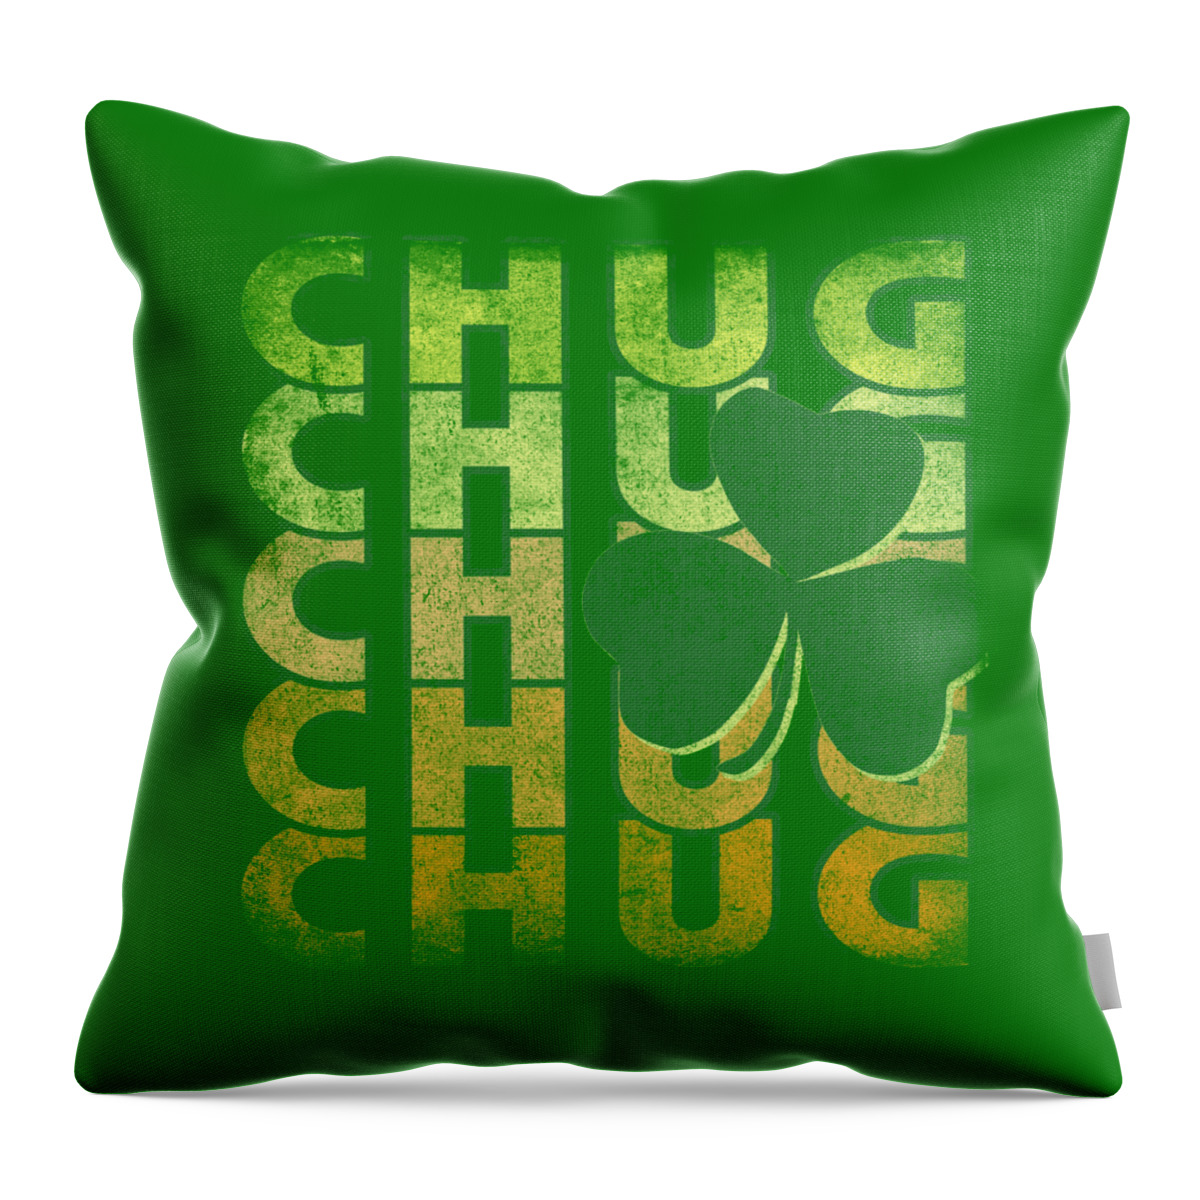 Funny Throw Pillow featuring the digital art Irish Chug Retro by Flippin Sweet Gear